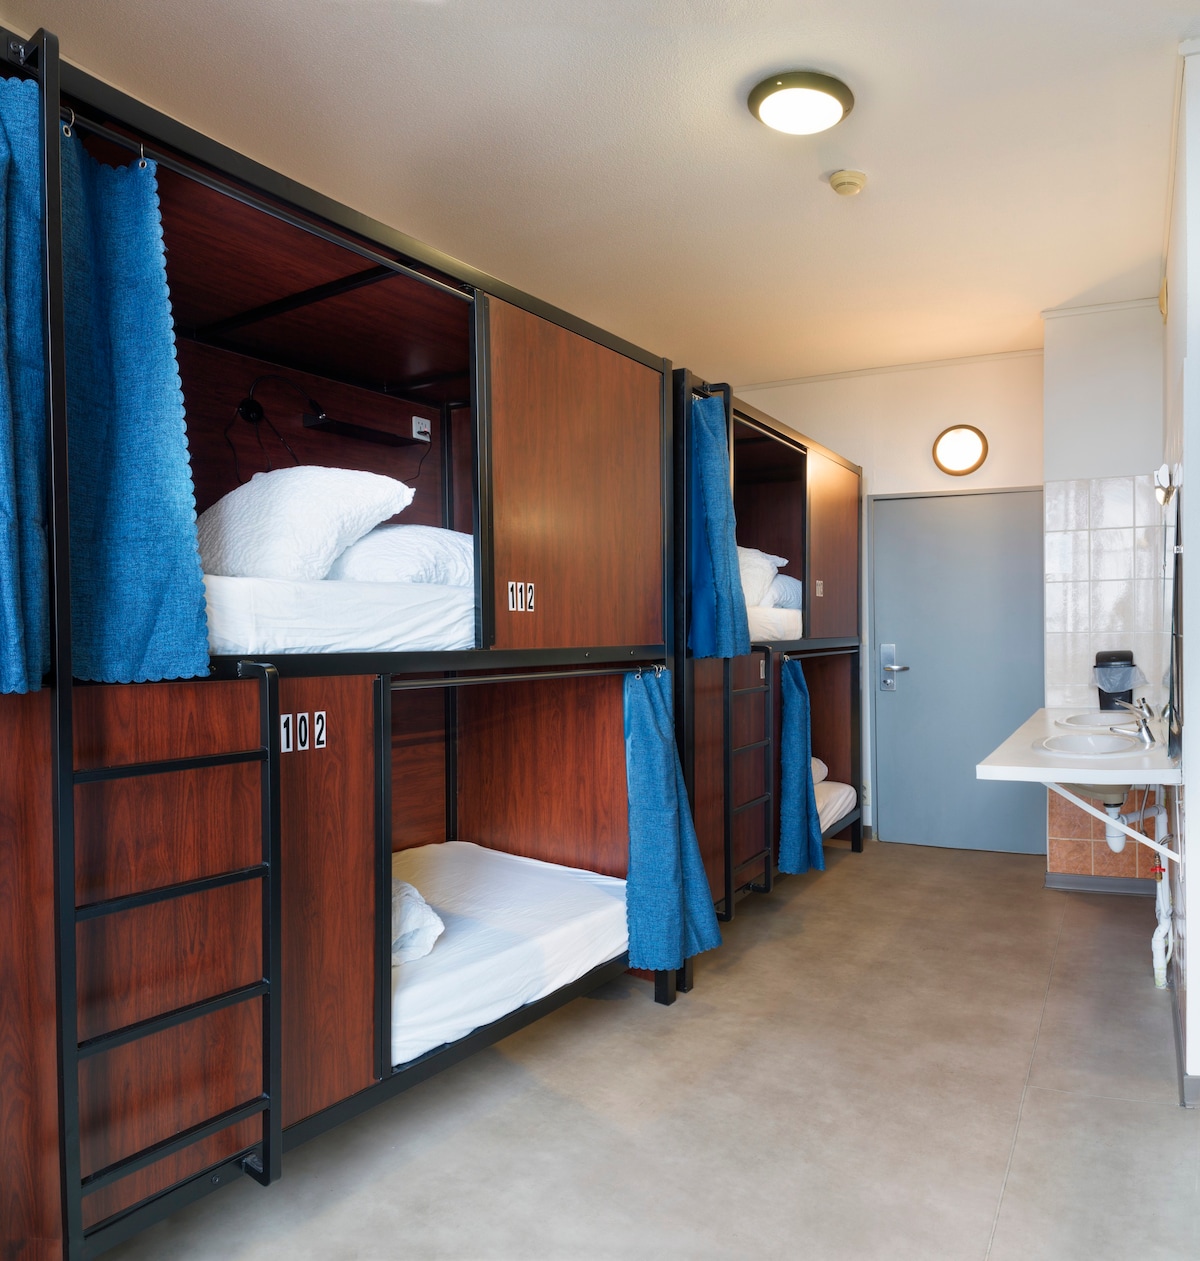 Hostel Lyon Centre dorm bed